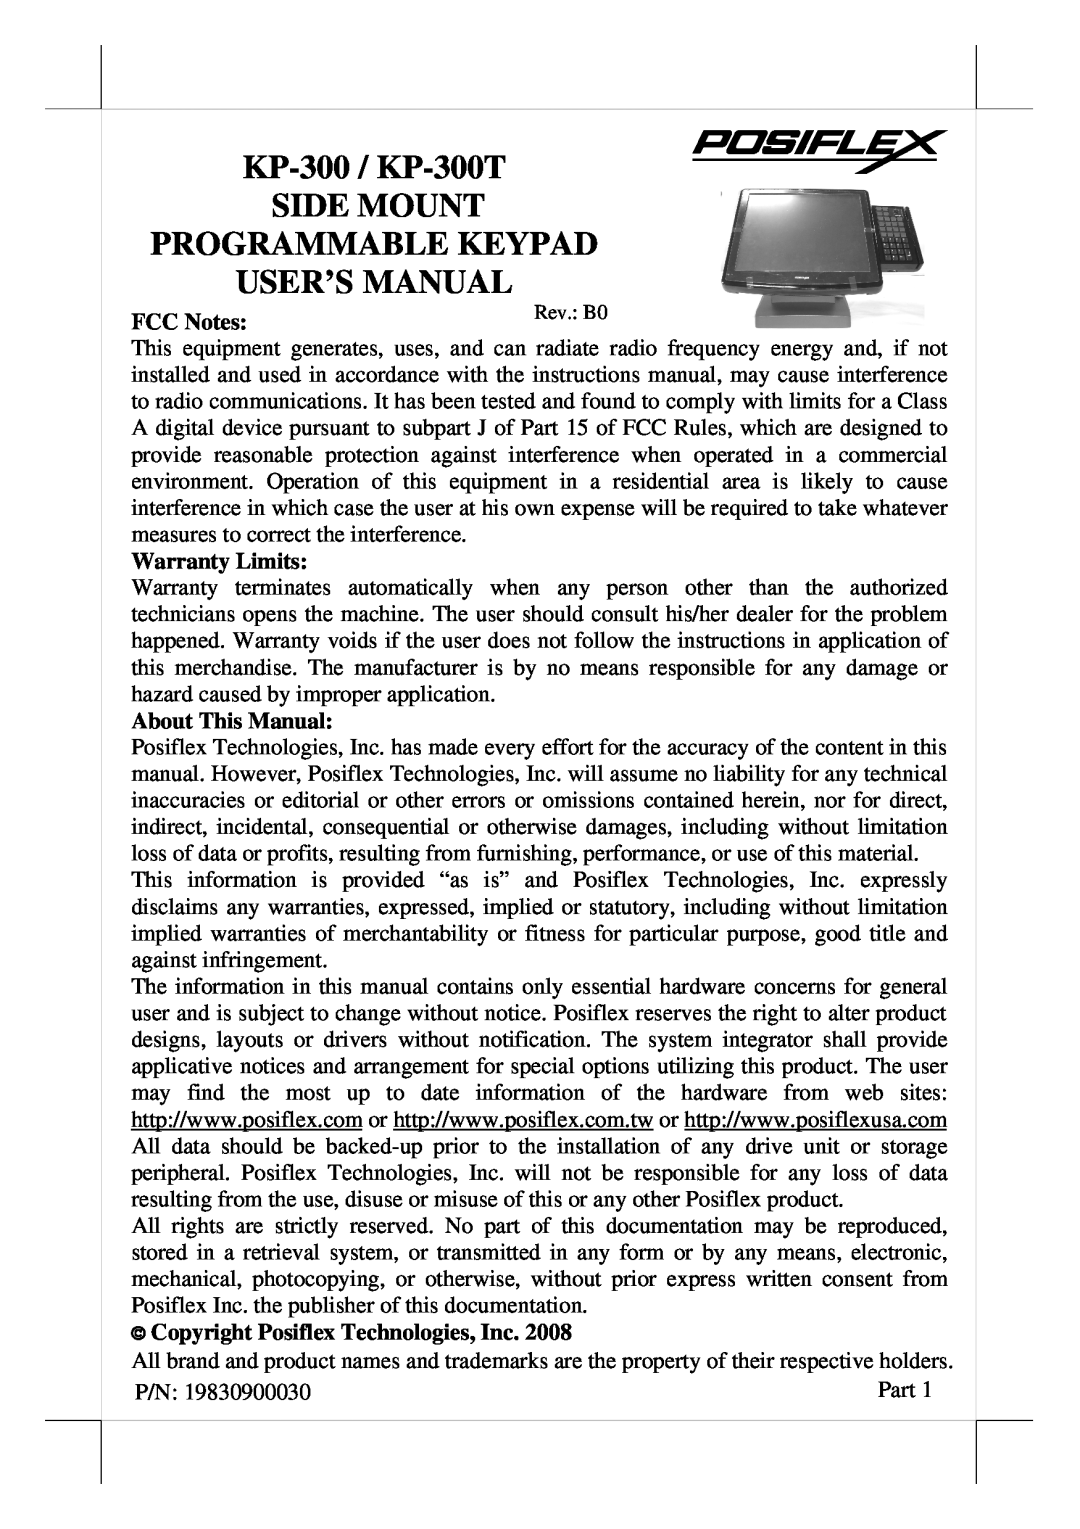 POSIFLEX Business Machines user manual KP-300 / KP-300T SIDE MOUNT PROGRAMMABLE KEYPAD, FCC Notes, Warranty Limits 